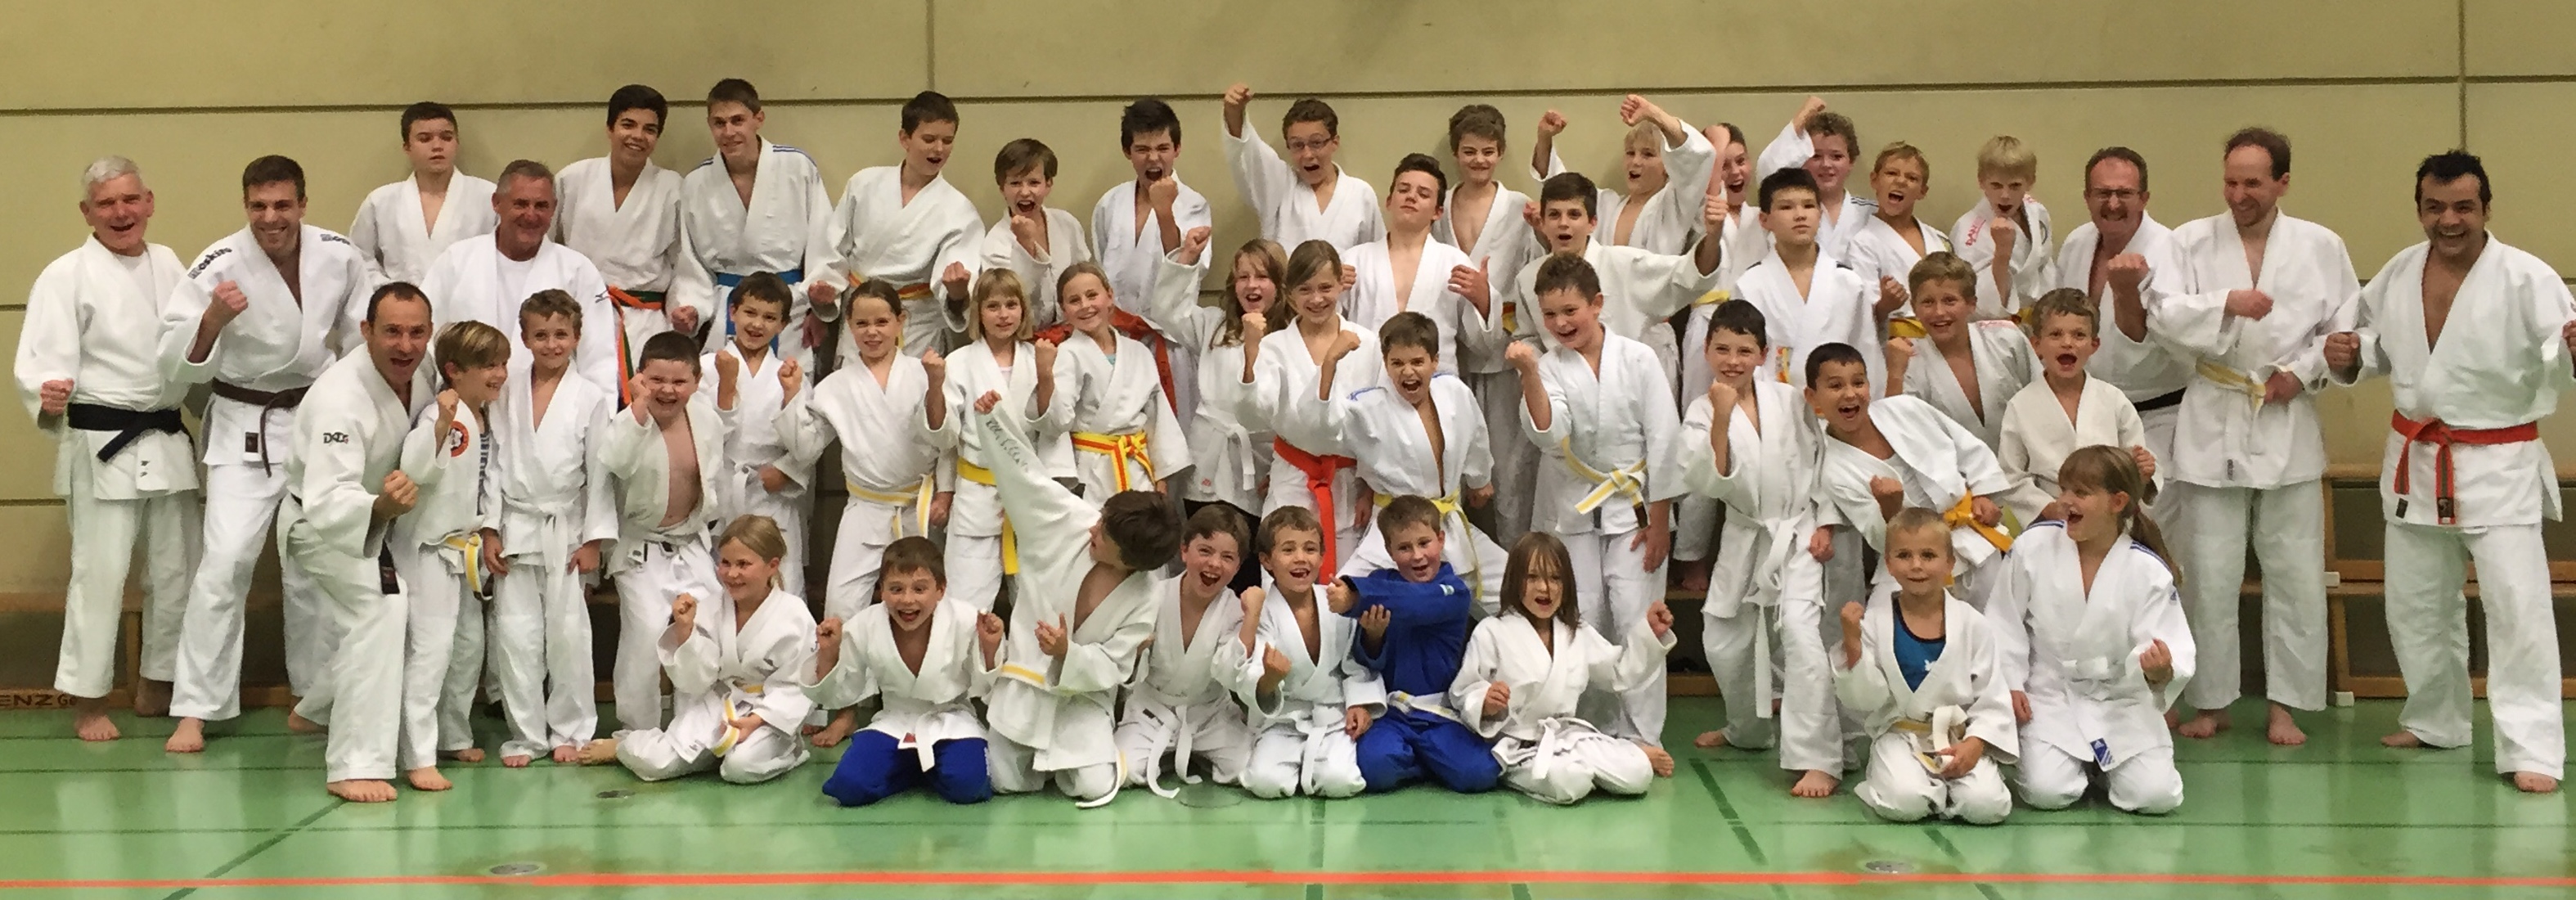 Judo-Lehrgang mit Peter Schlatter am 17.10.2014 Kindergruppe